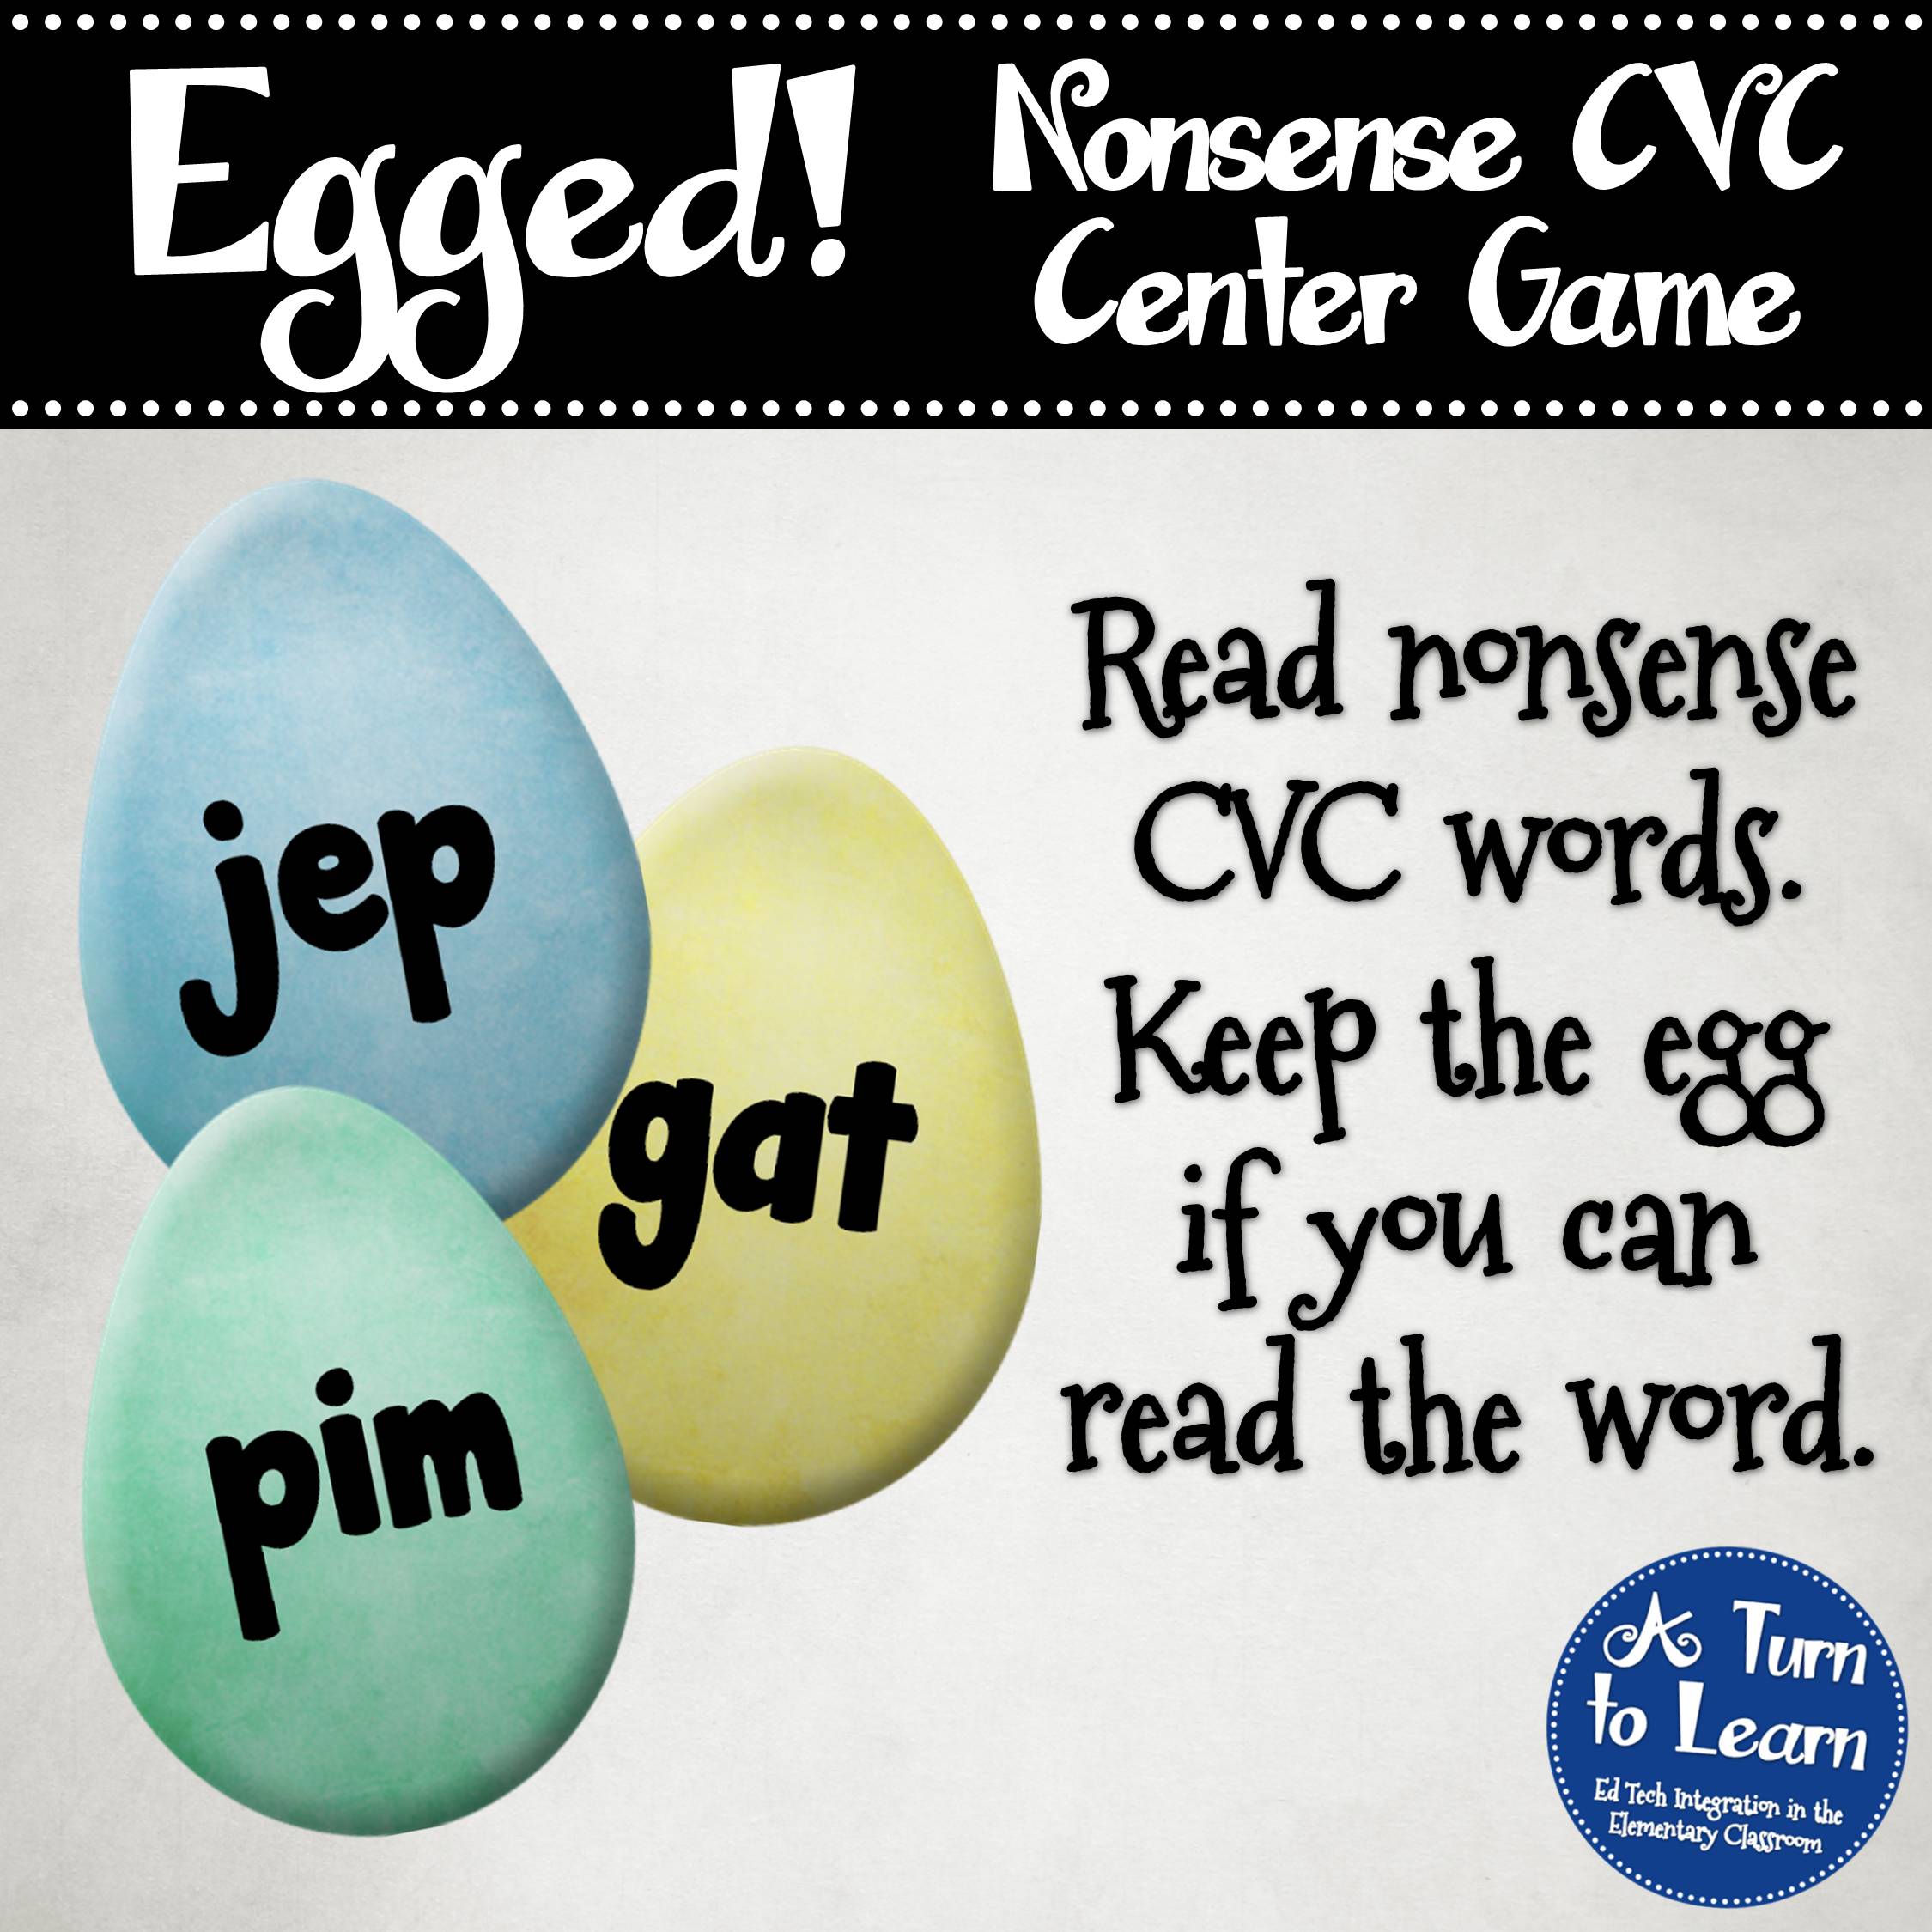 egged-nonsense-cvc-words-center-freebie-a-turn-to-learn